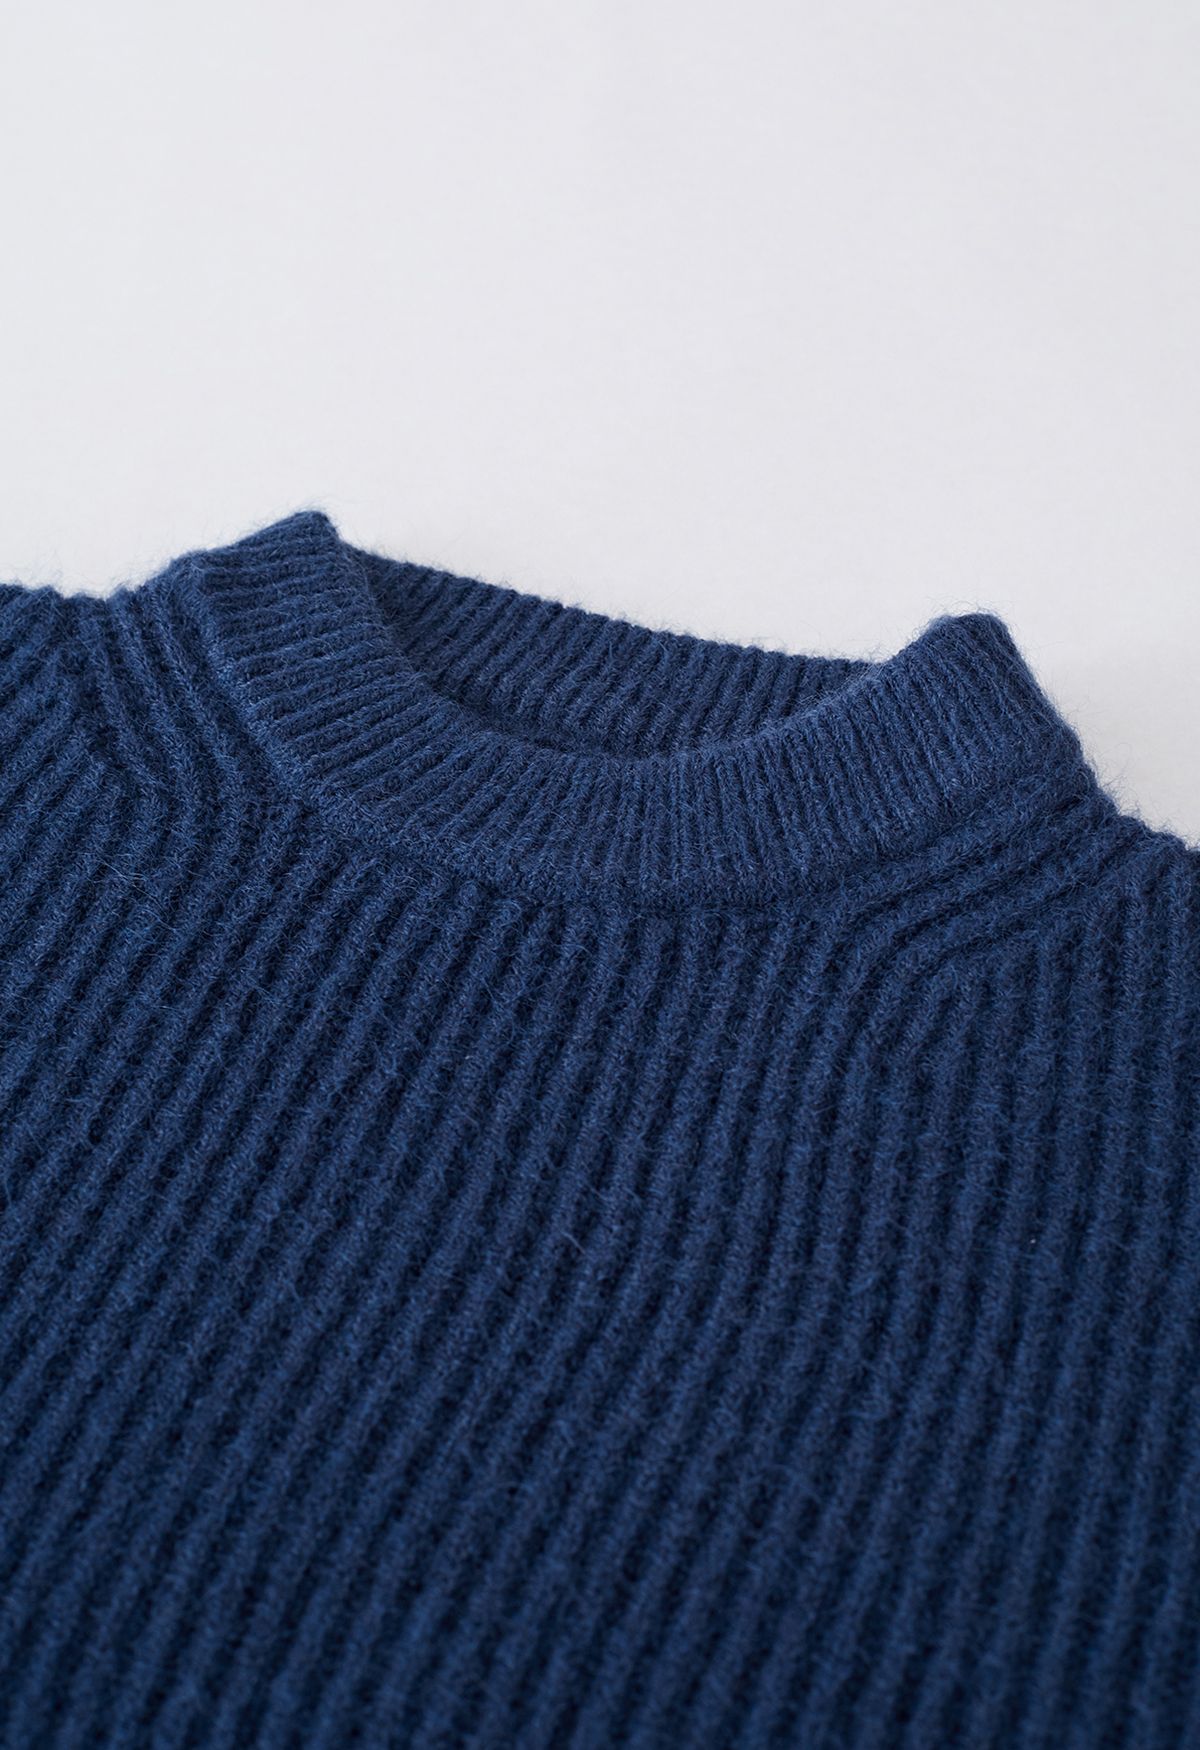 Solid Color Rib Knit Sweater in Indigo